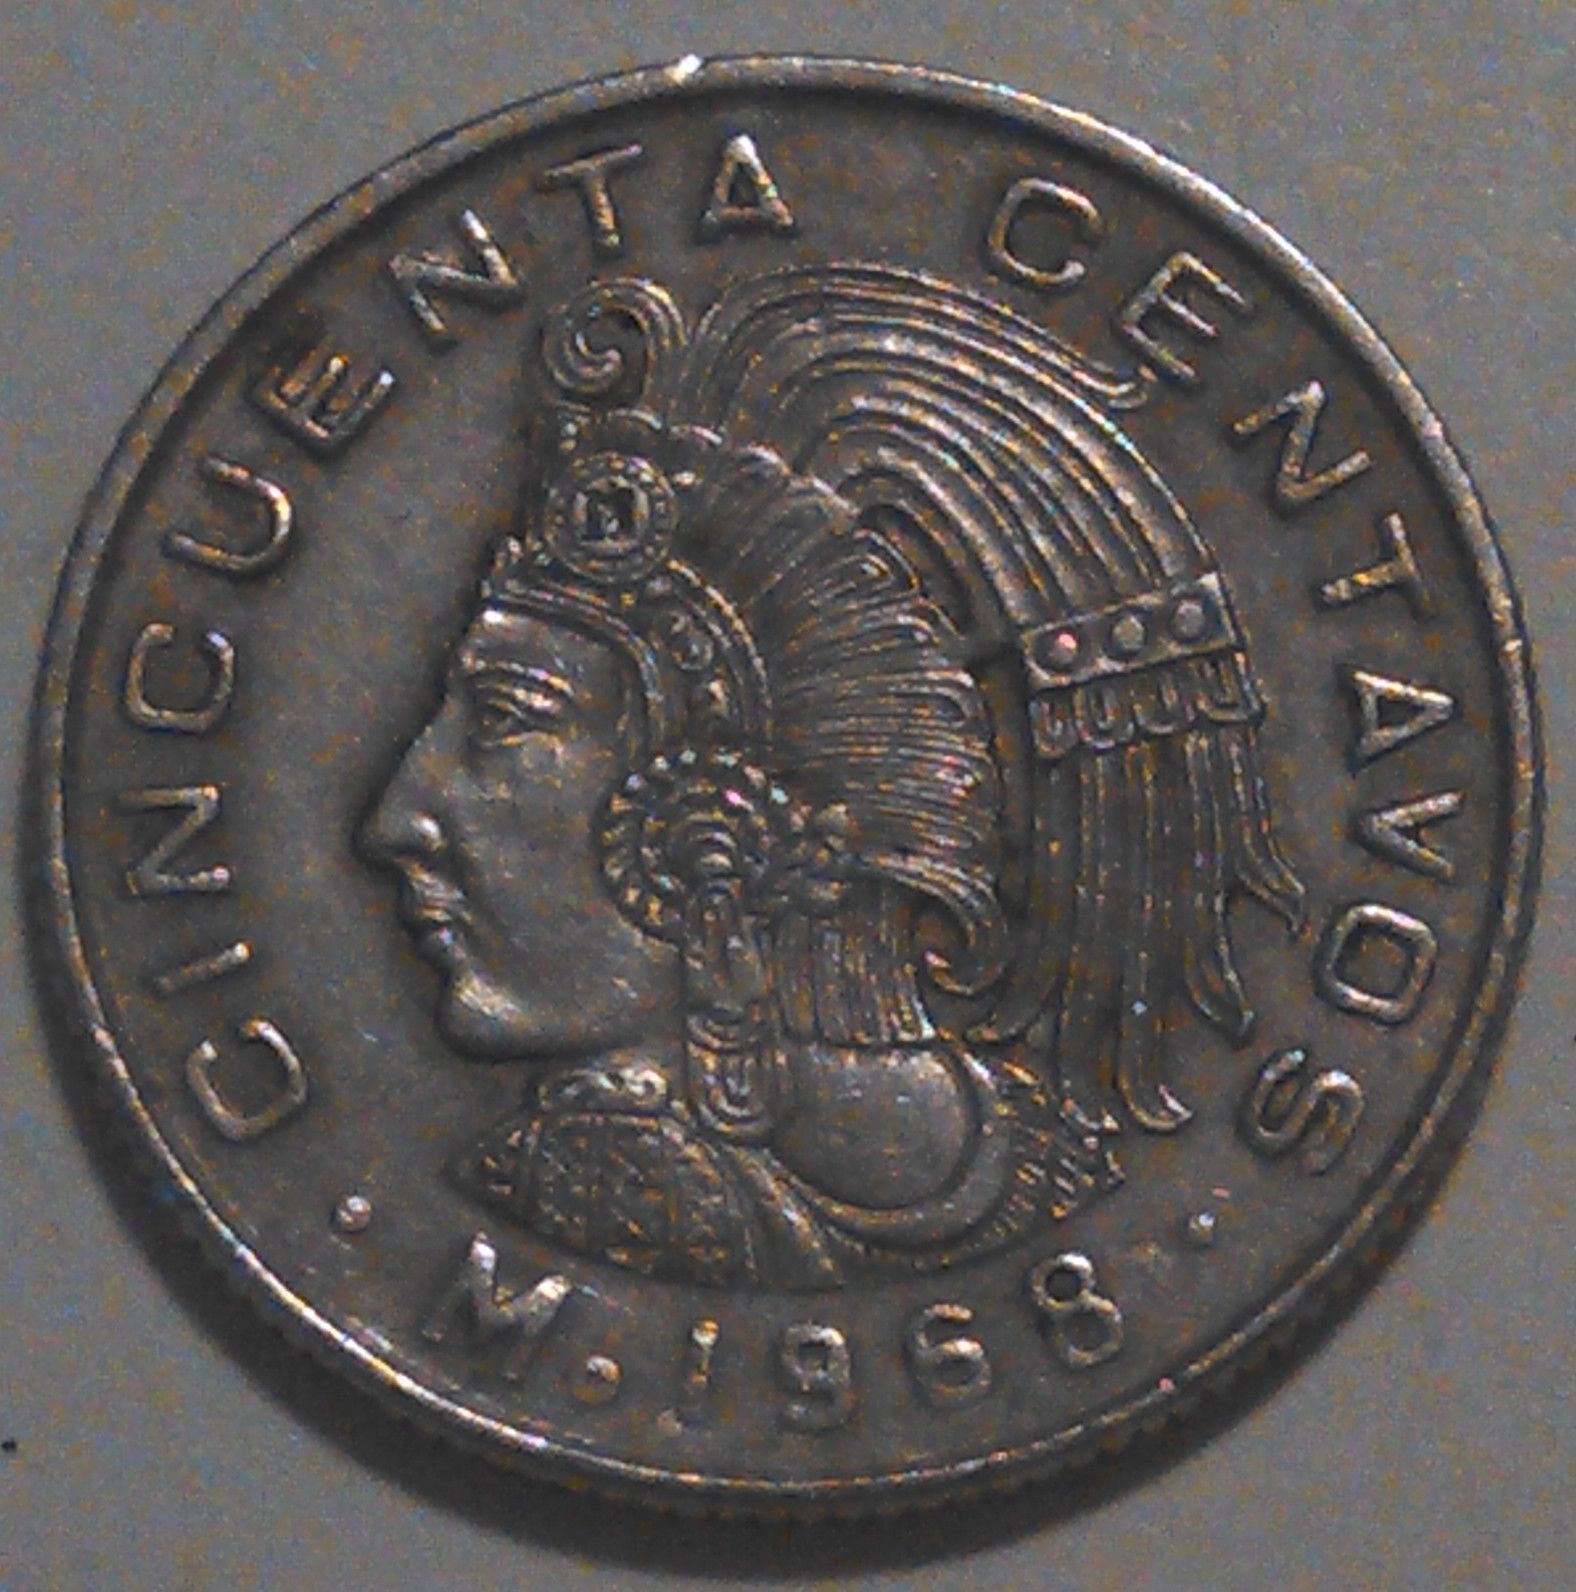 1968 CINCUENTA CENTAVOS (50 CENT) MEXICAN COIN VERY NICE COIN #72 ...